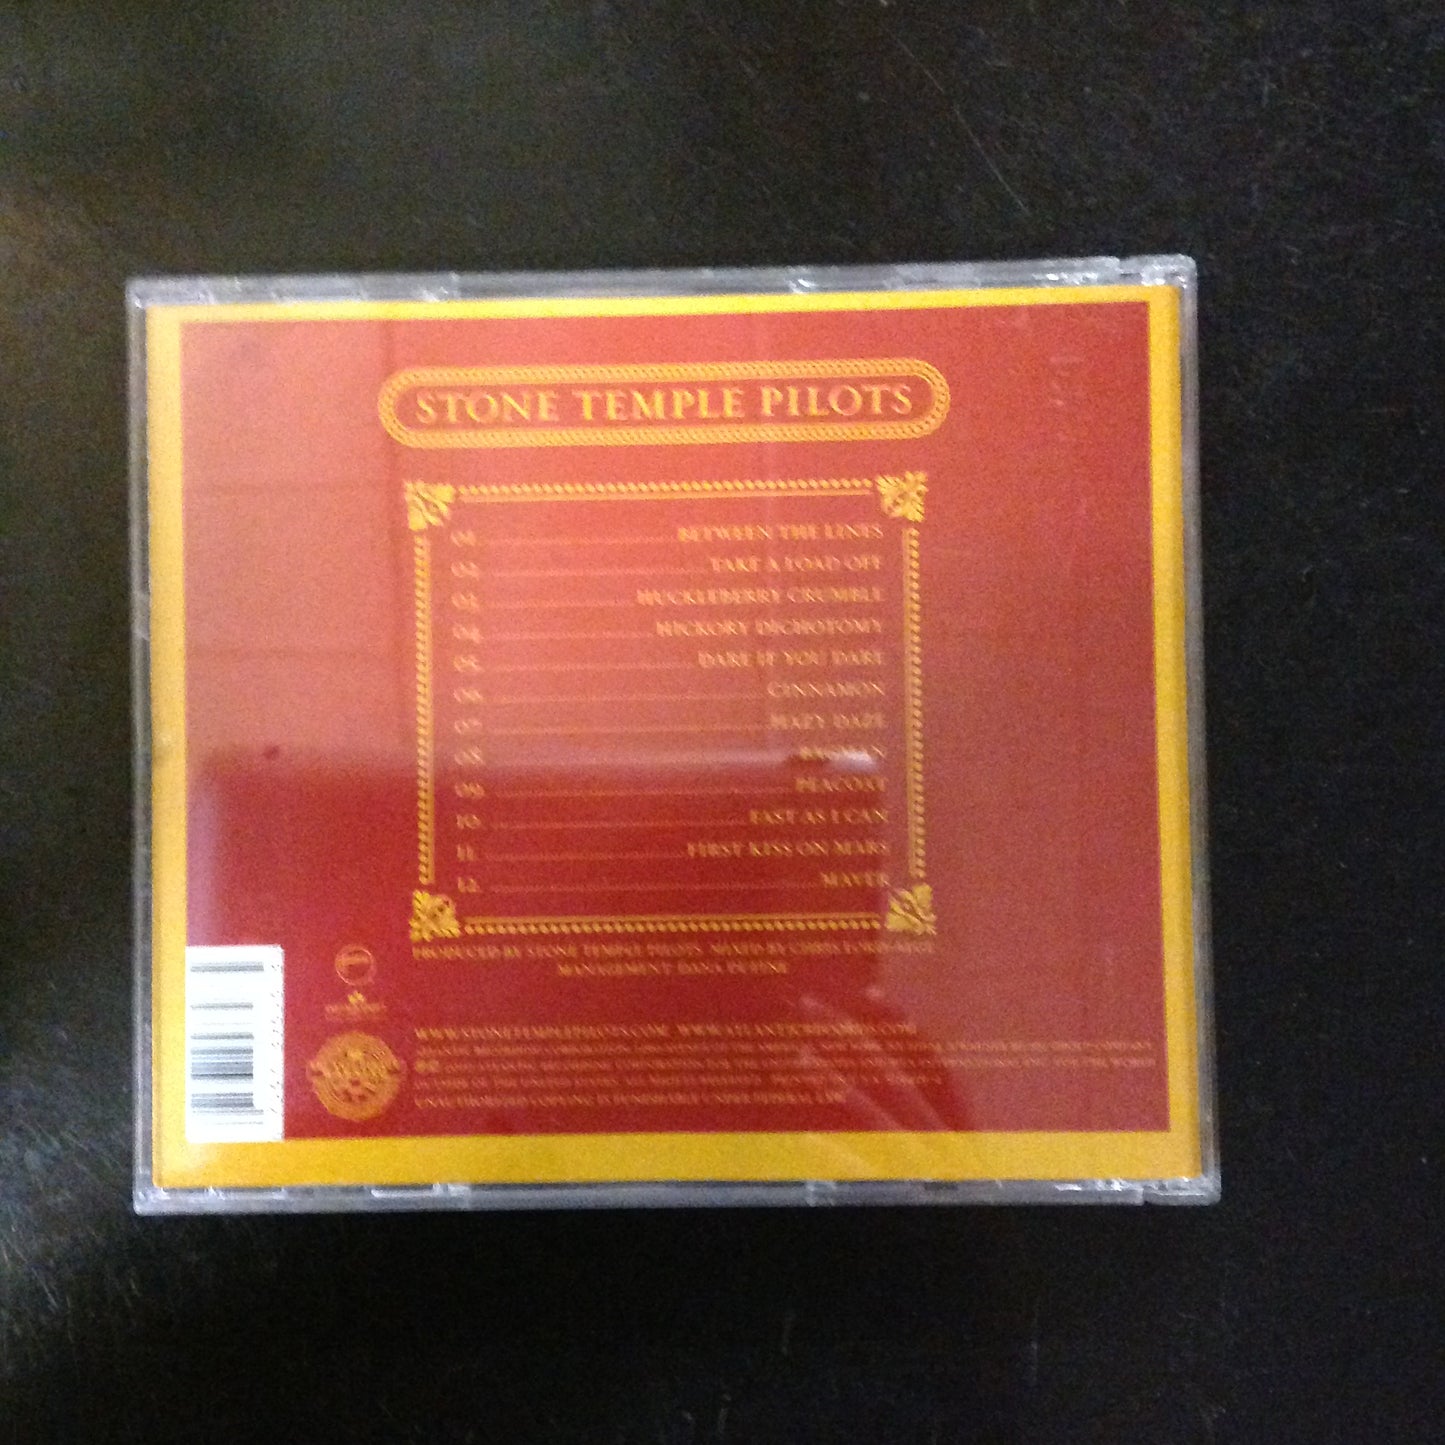 CD Stone Temple Pilots STP 519419-2 Alternative Hard Rock